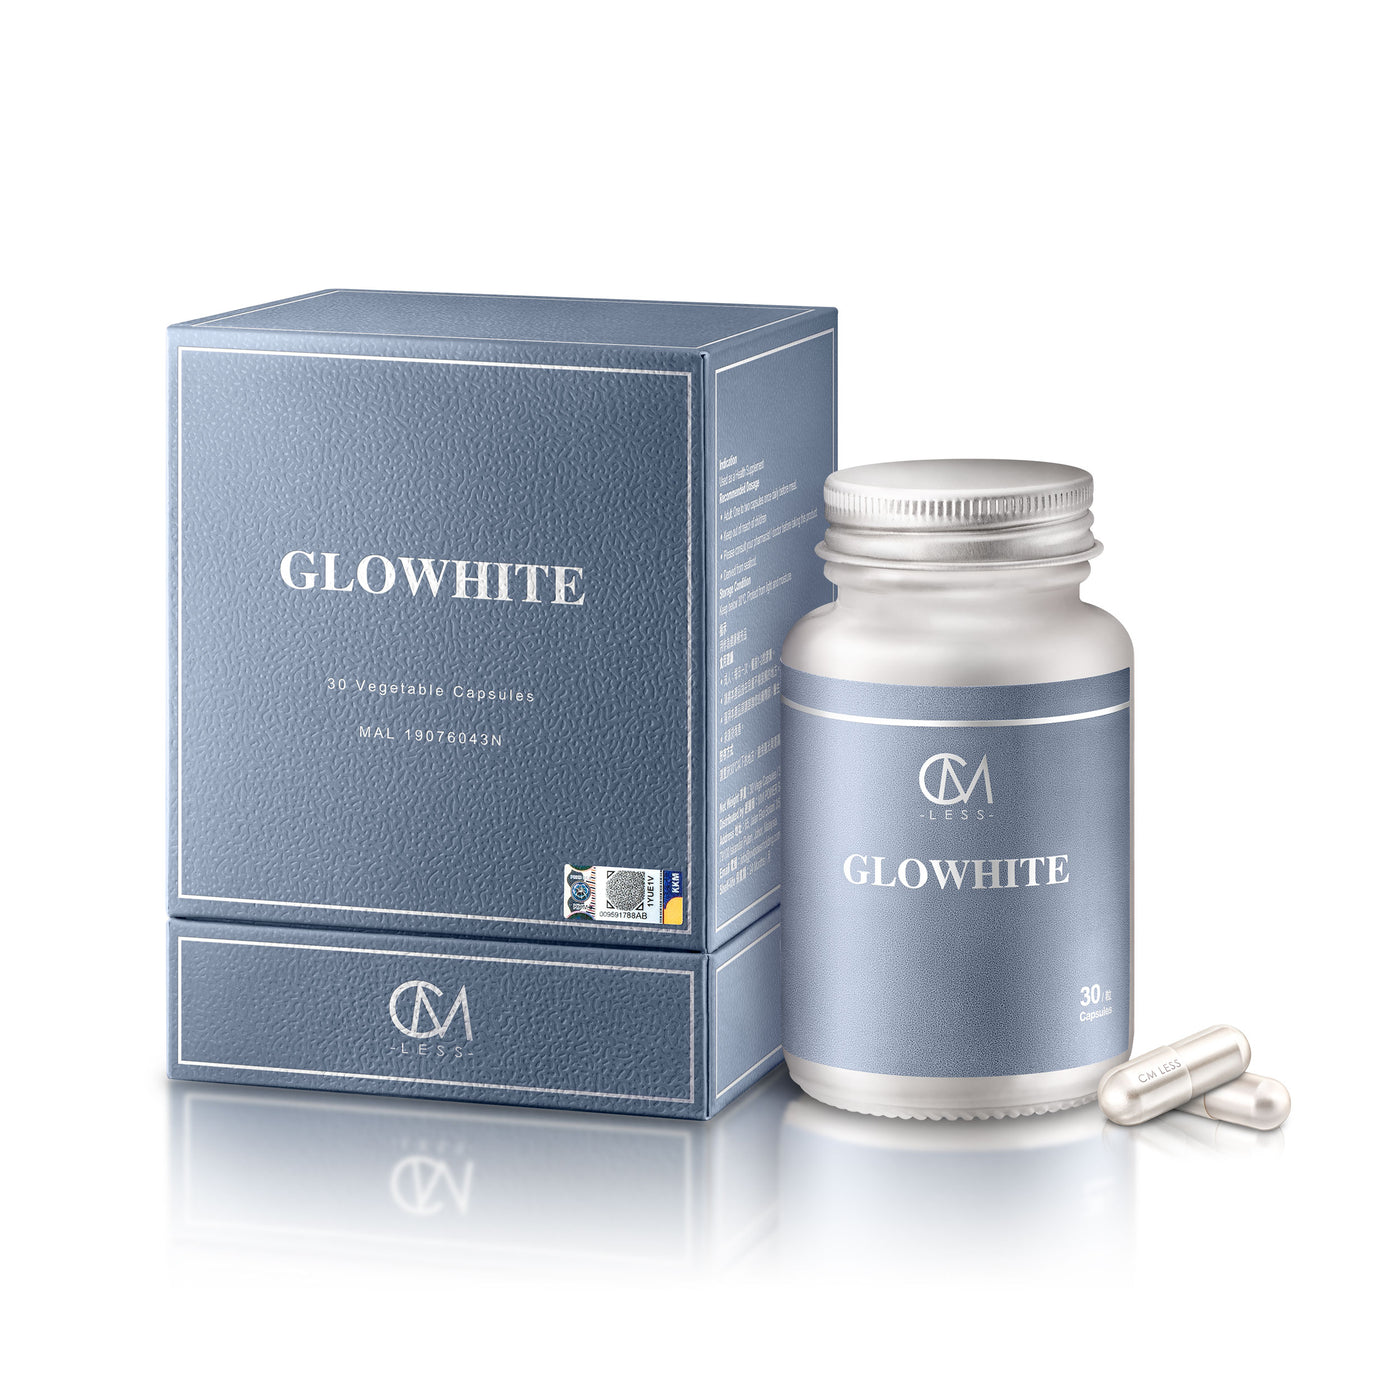 GLOWHITE (PRODUCT VALID UNTIL DEC 30, 2024)